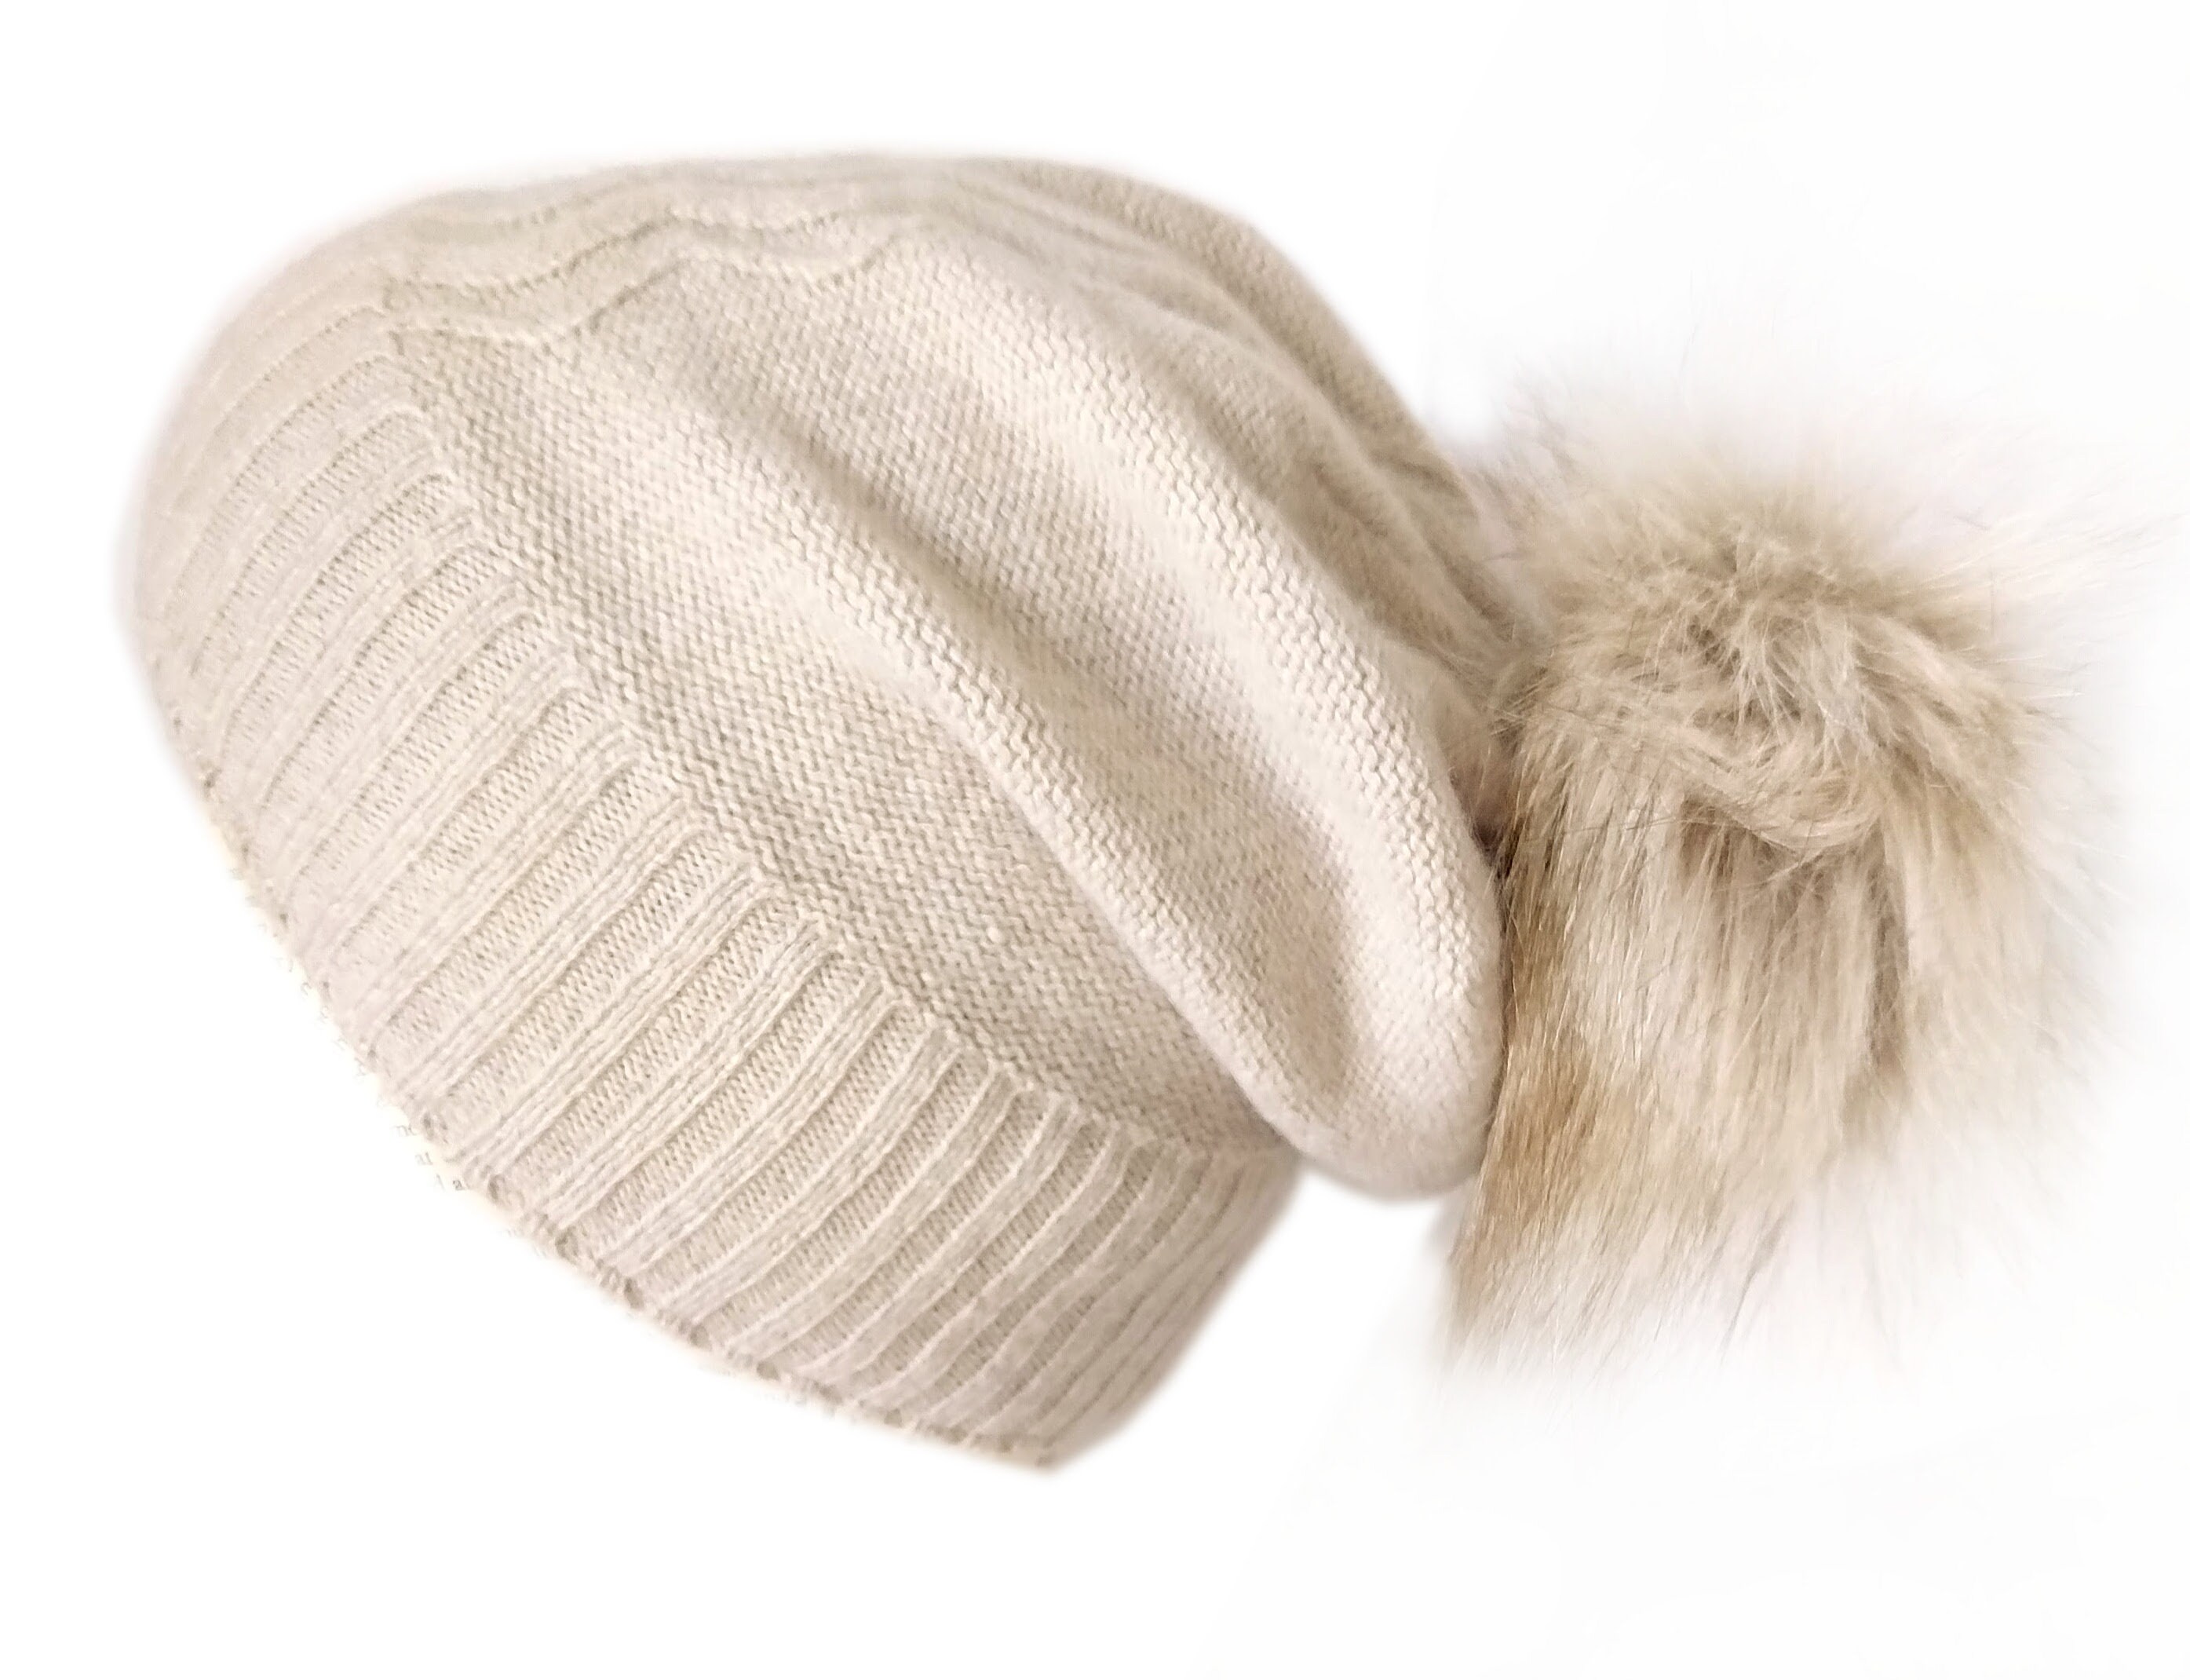 Large 15cm Ball Women Knit Hat Winter Raccoon Fur Pom Beanie Ski Bobble Cap UK 